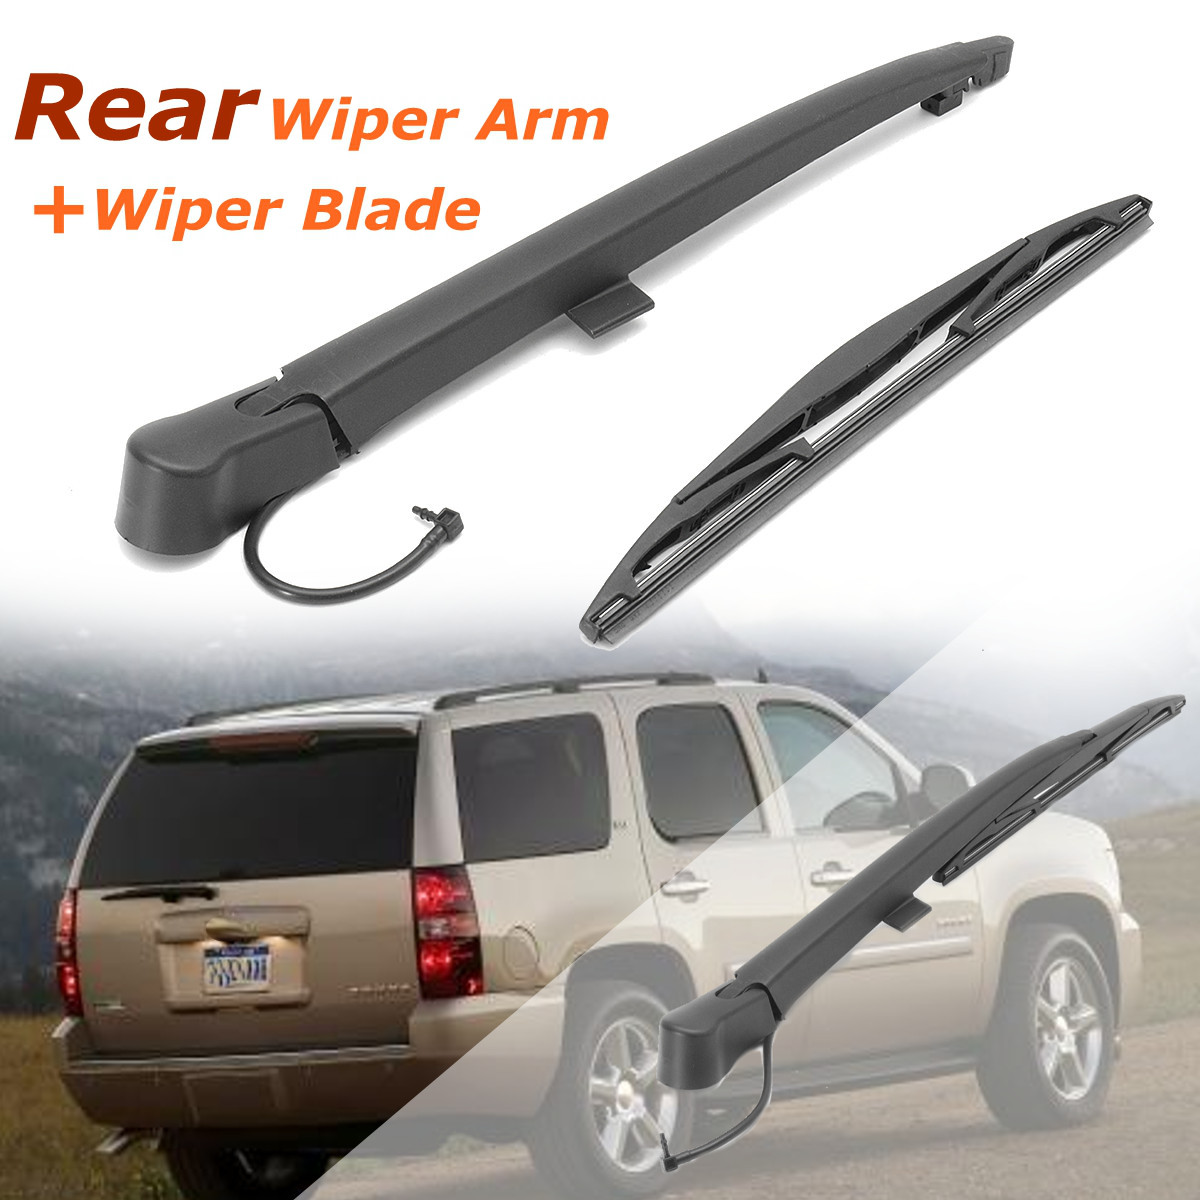 Rear window wiper arm & blade for 2007-2013 chevrolet tahoe suburban 2500 1500 Sale - Banggood.com 2006 Chevy Silverado 2500 Wiper Blade Size